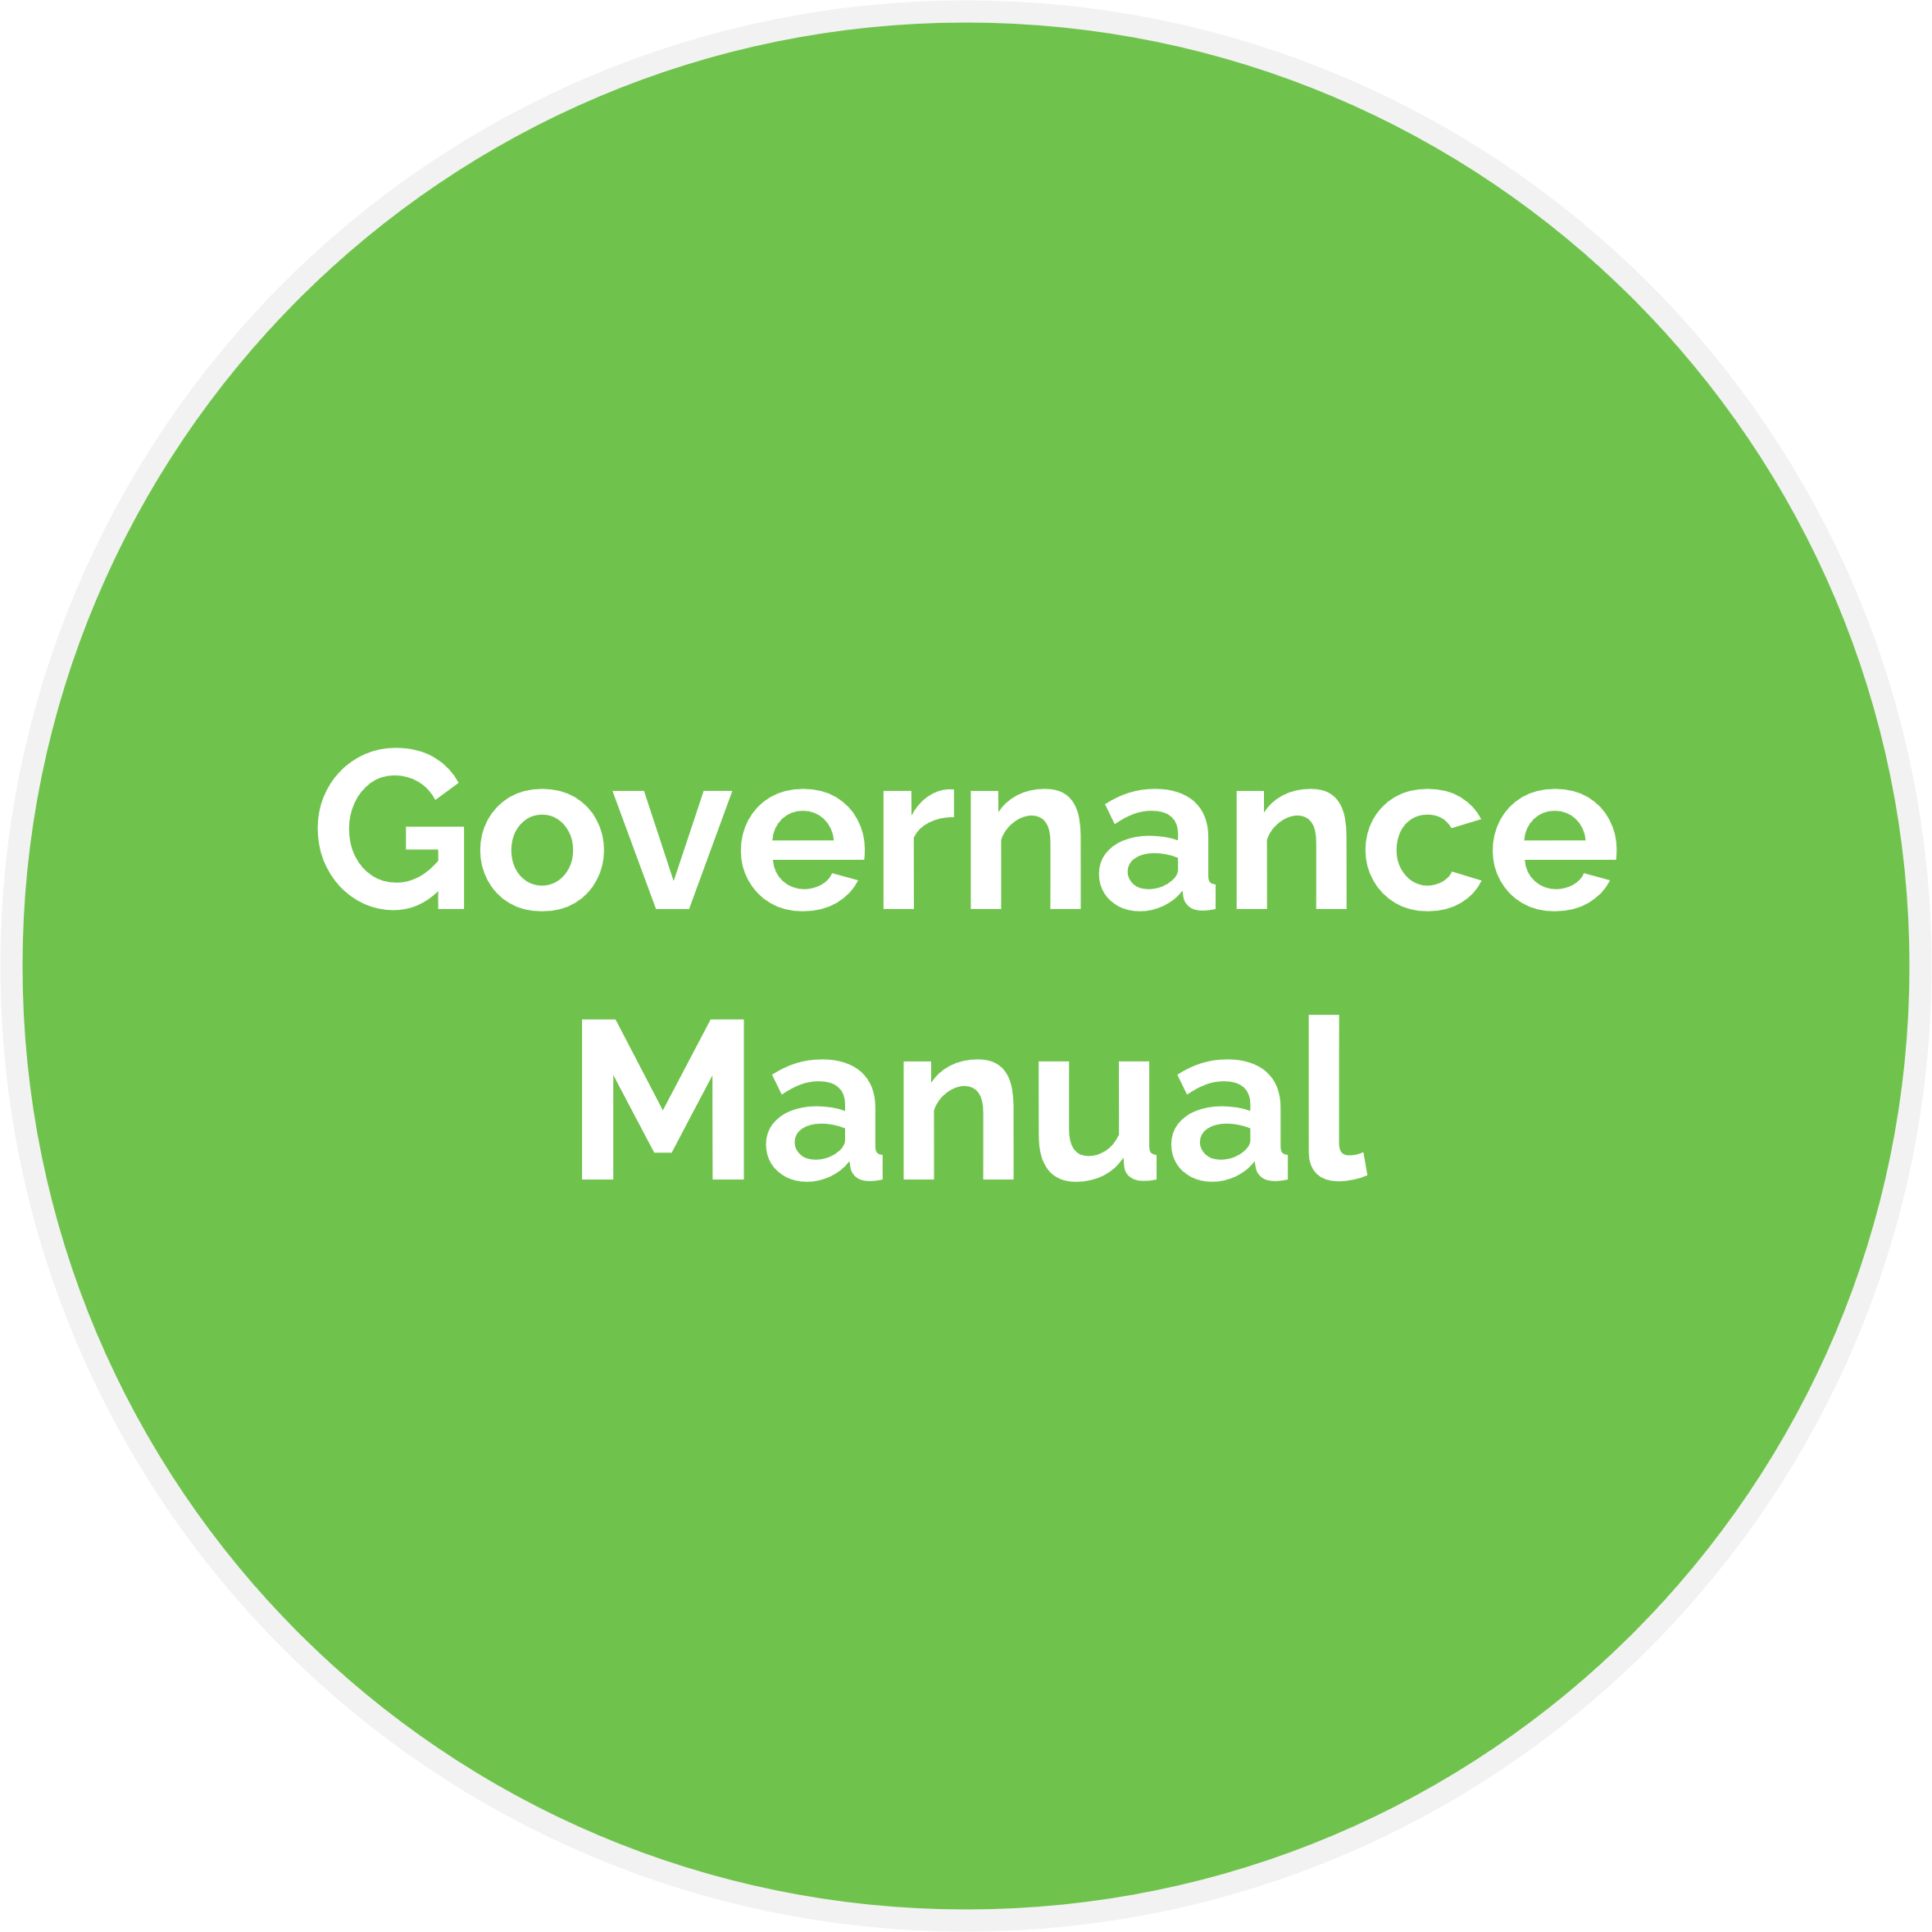 Governance Manual icon